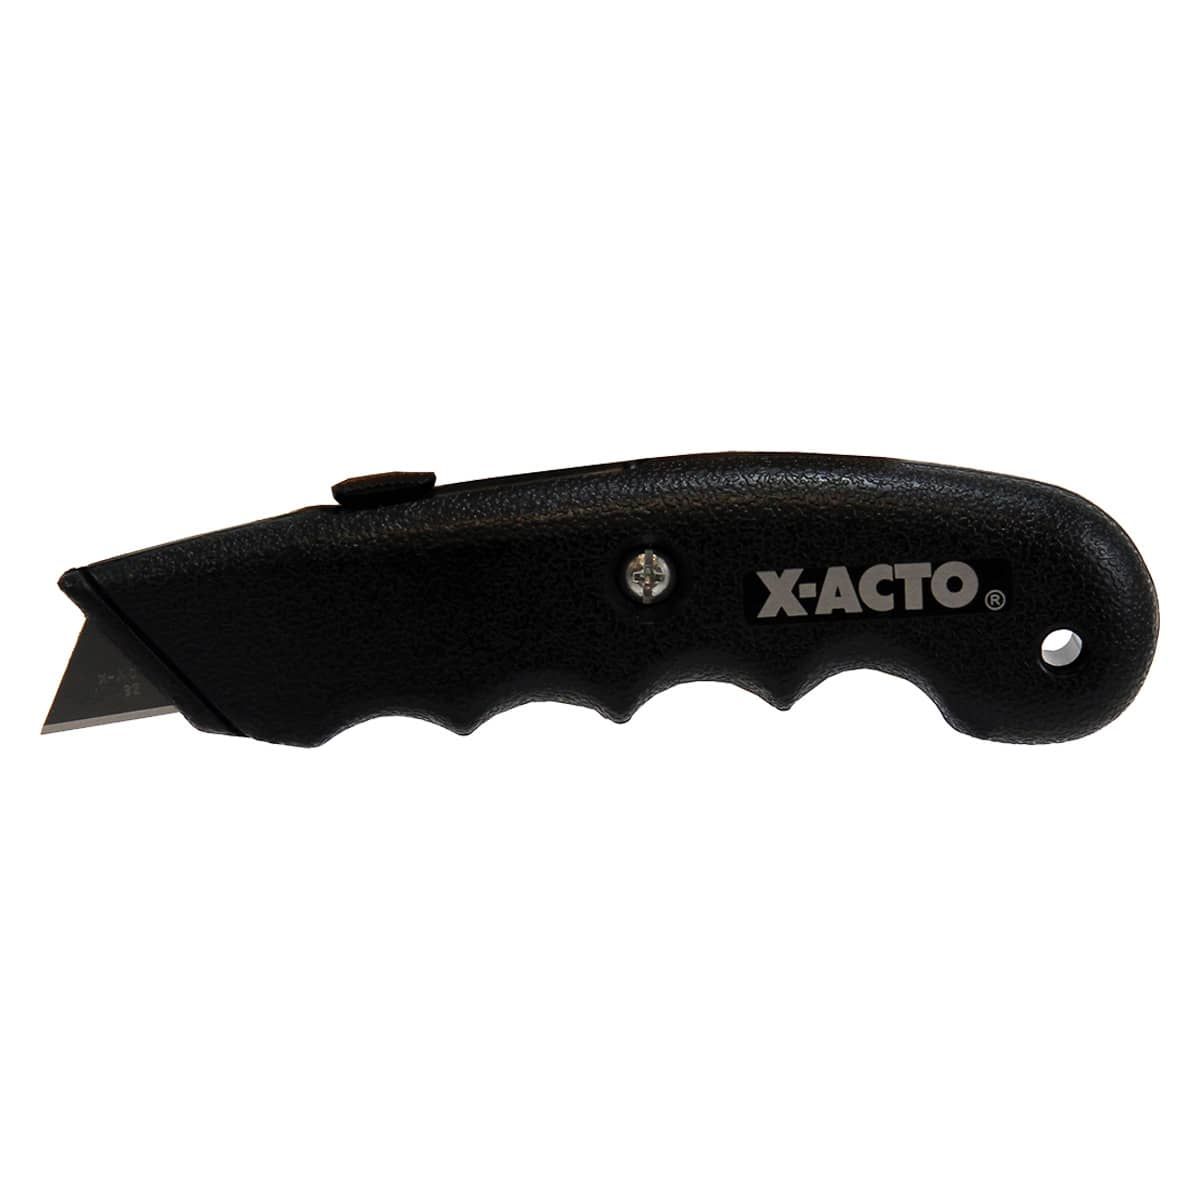 Xacto Zseries #2 Knife W/ Cap